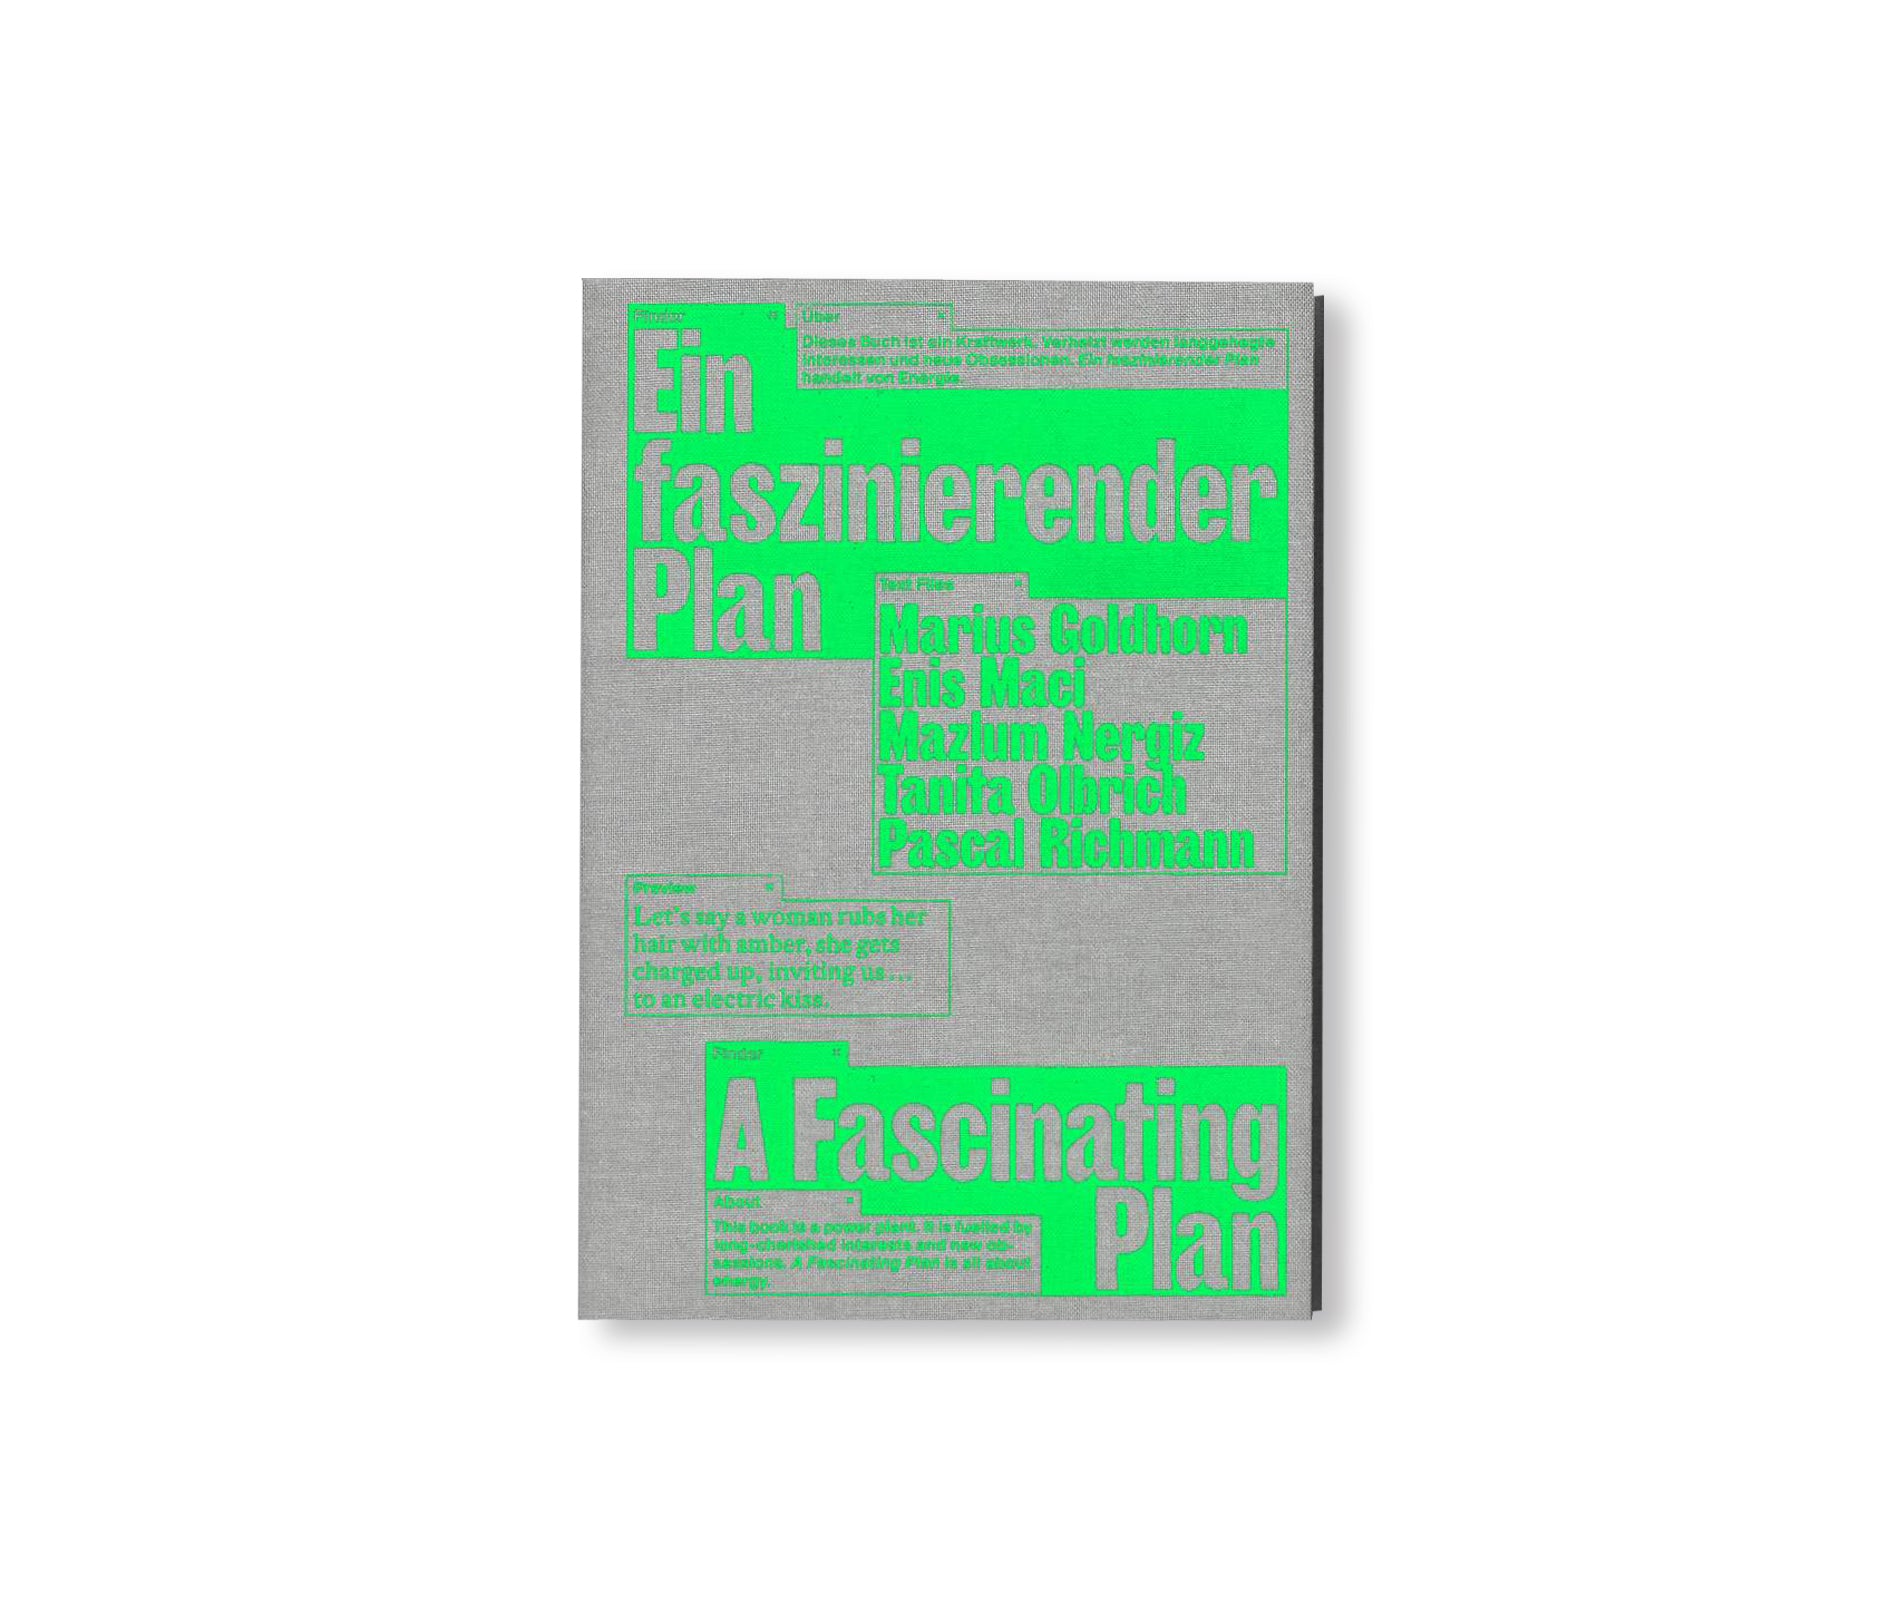 A FASCINATING PLAN by Marius Goldhorn, Enis Maci, Mazlum Nergiz, Tanita Olbrich, Pascal Richmann